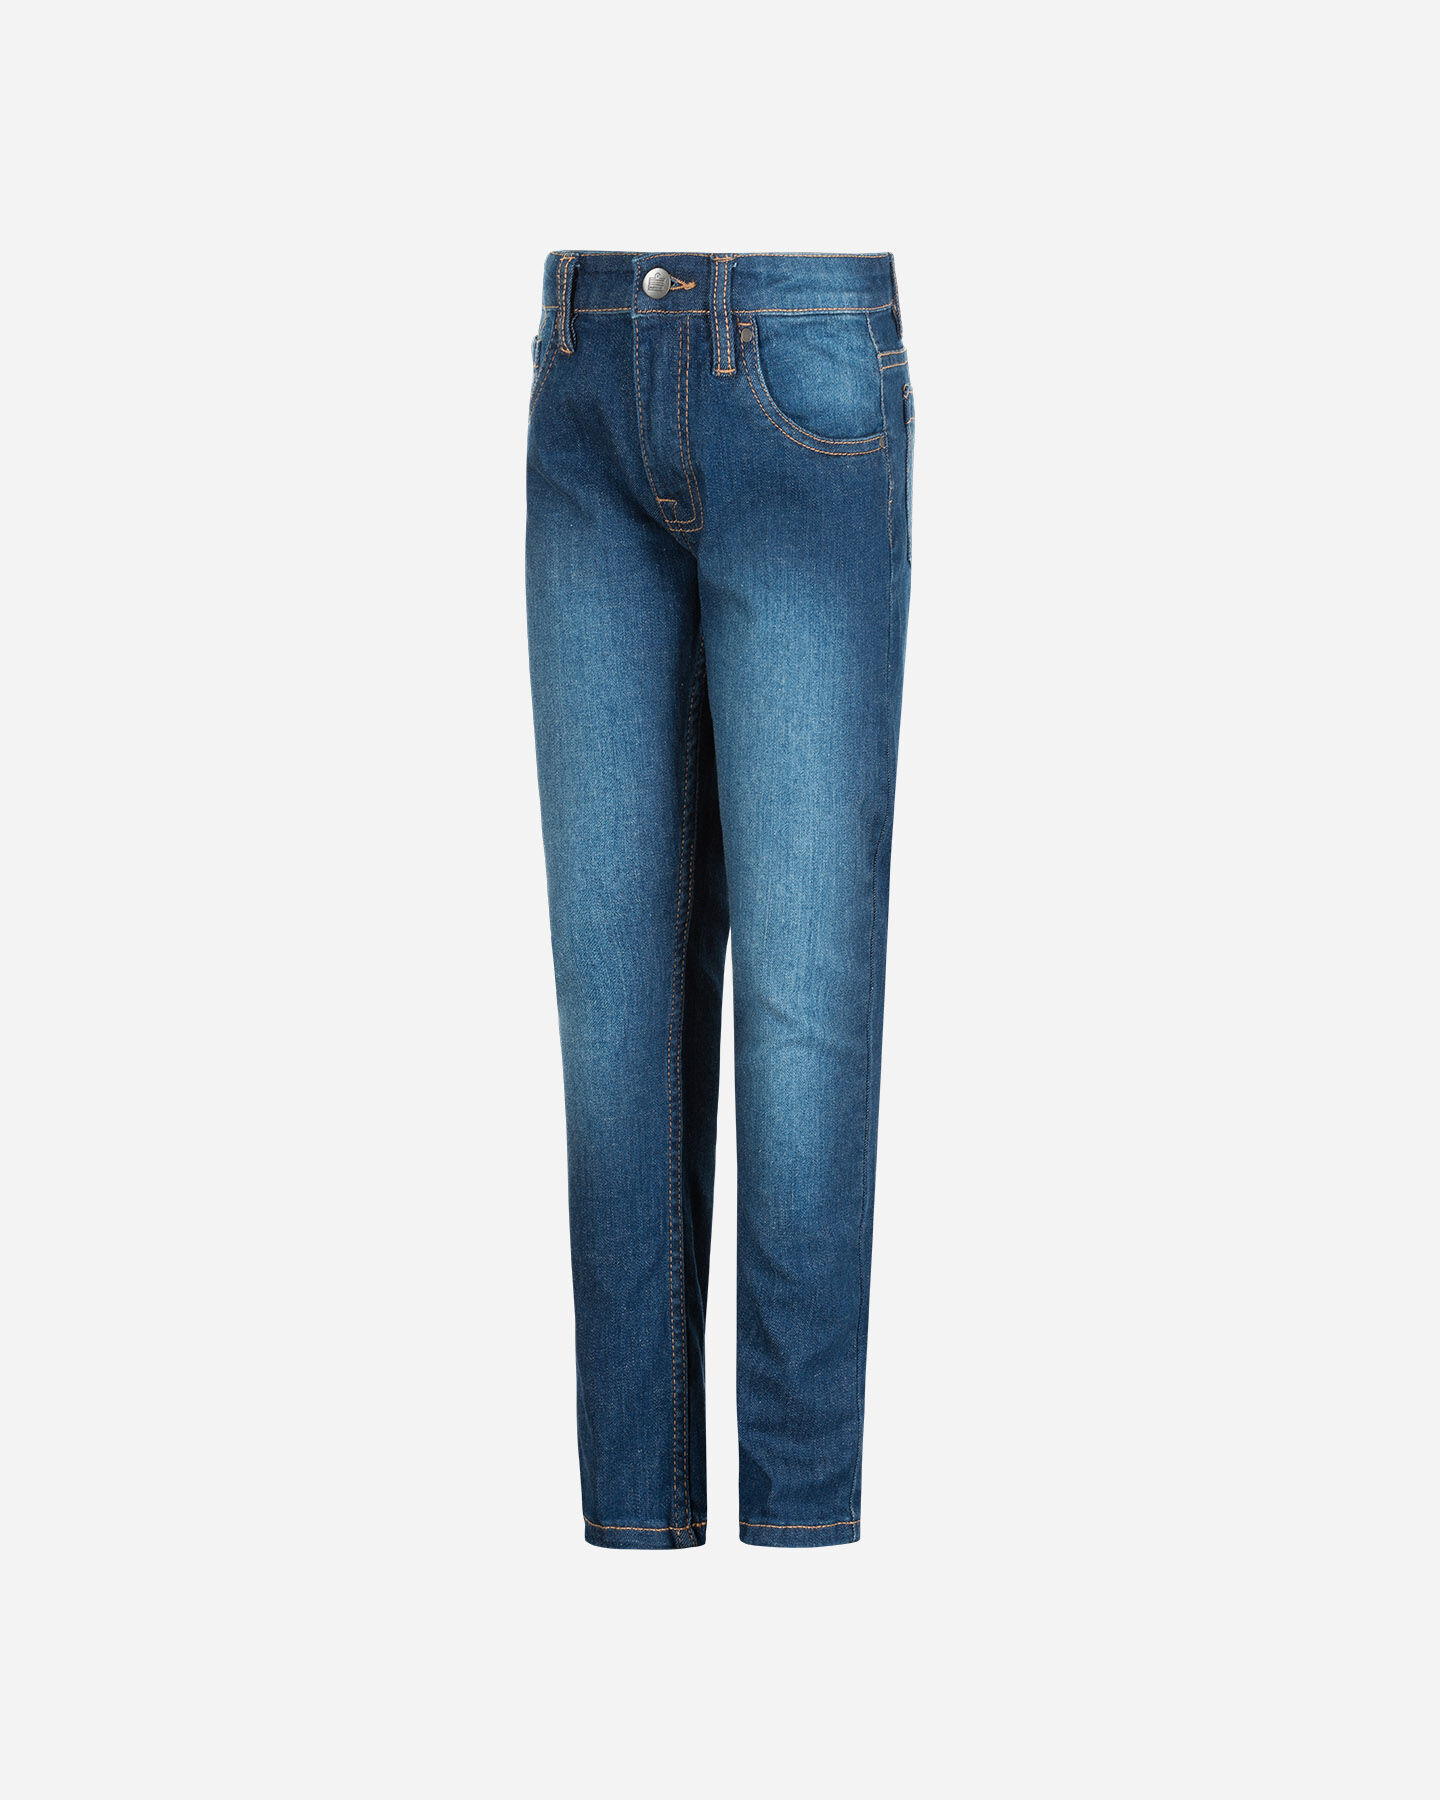  Jeans ADMIRAL CLASSIC JR S4081318|DD|4A scatto 0